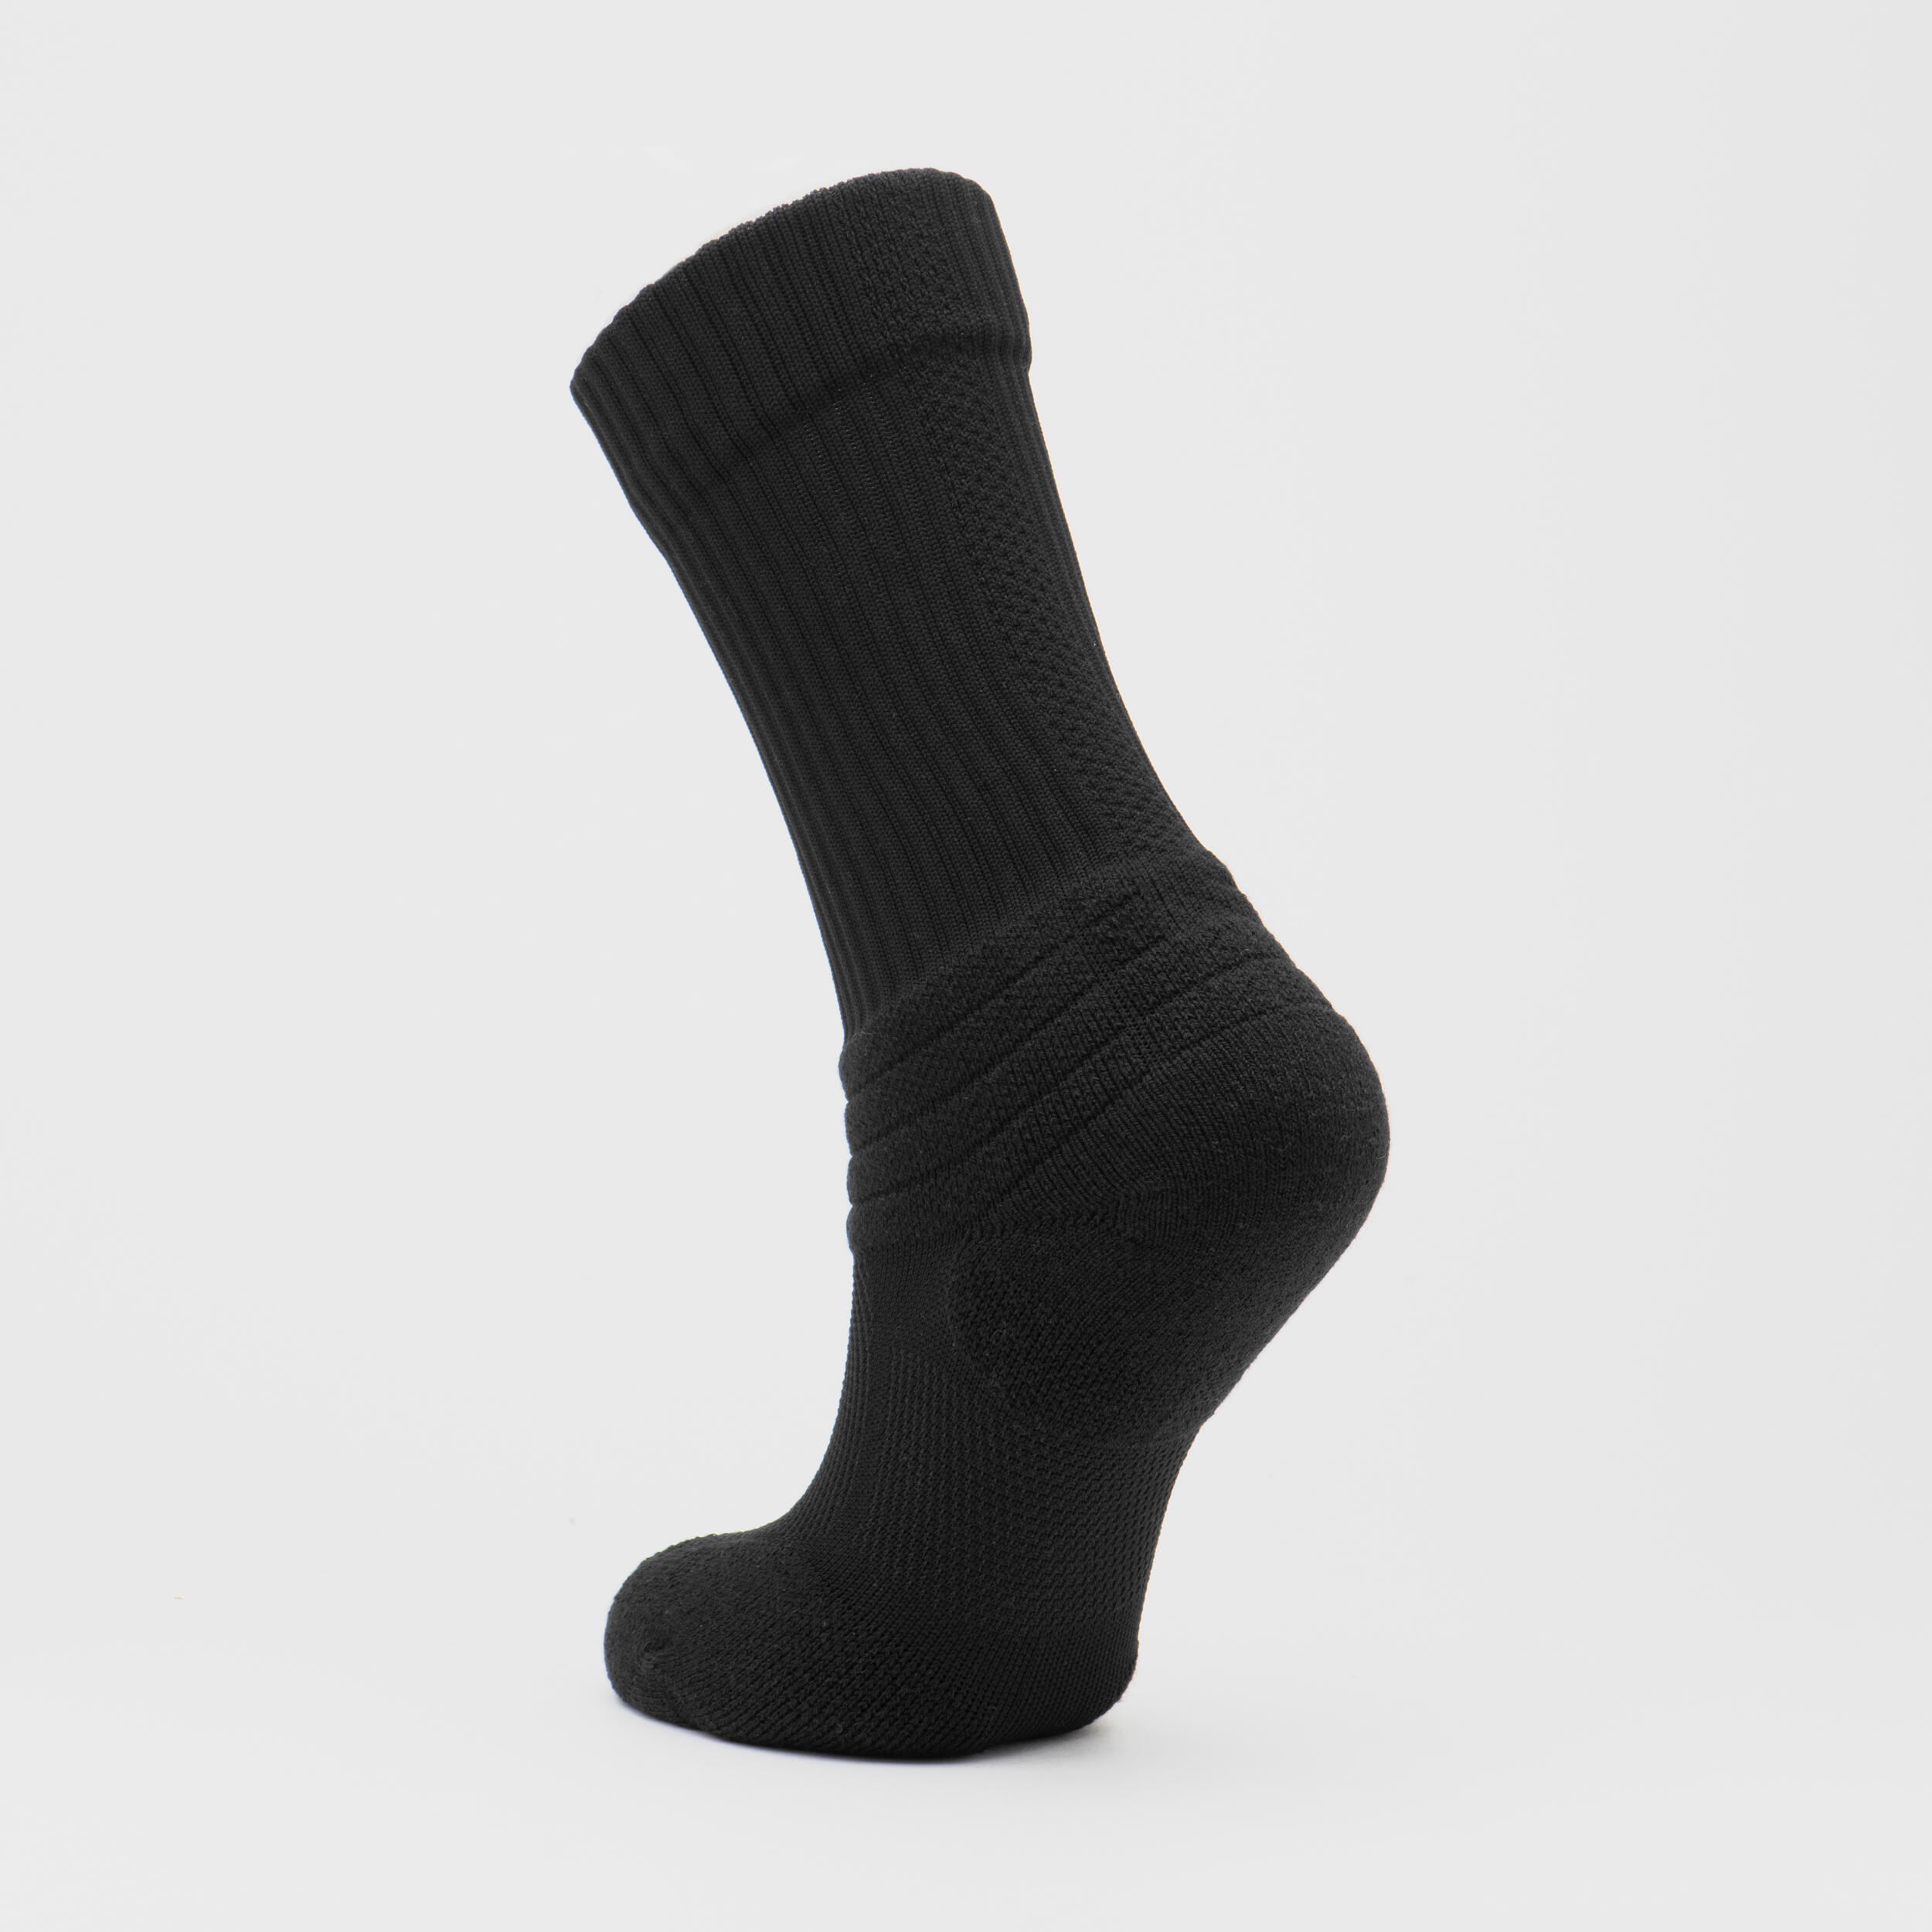 Kids' Basketball Socks SO900 NBA 2 Pairs - Black 4/4